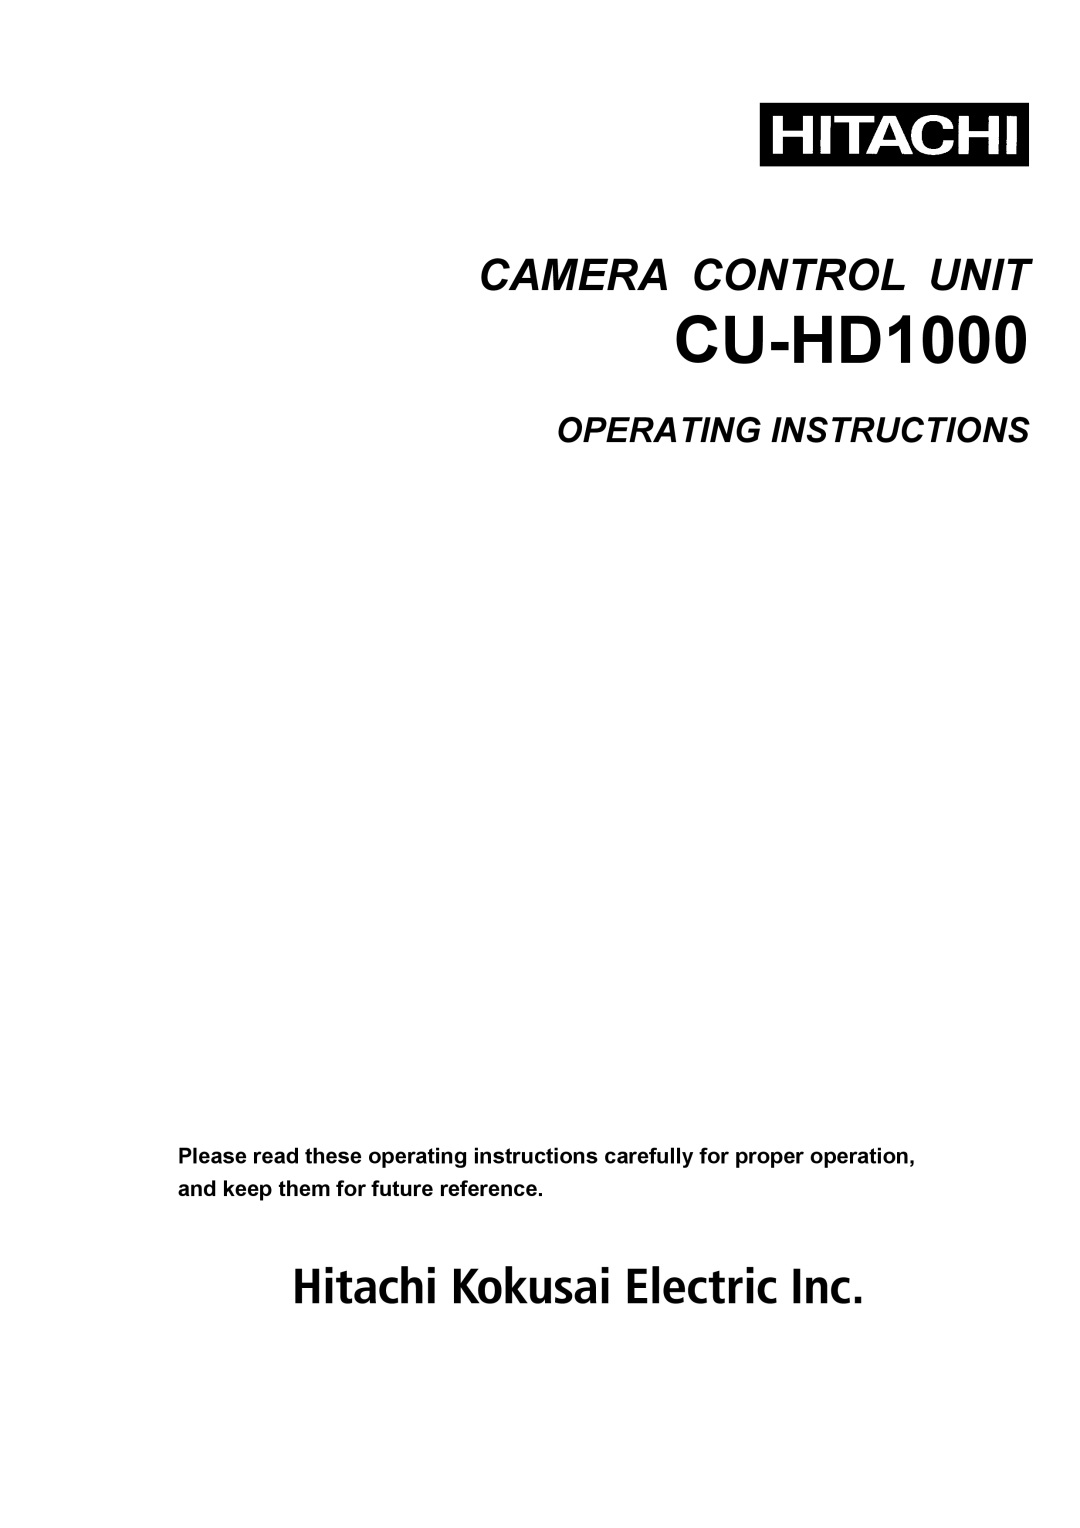 Hitachi CU-HD1000 operating instructions 